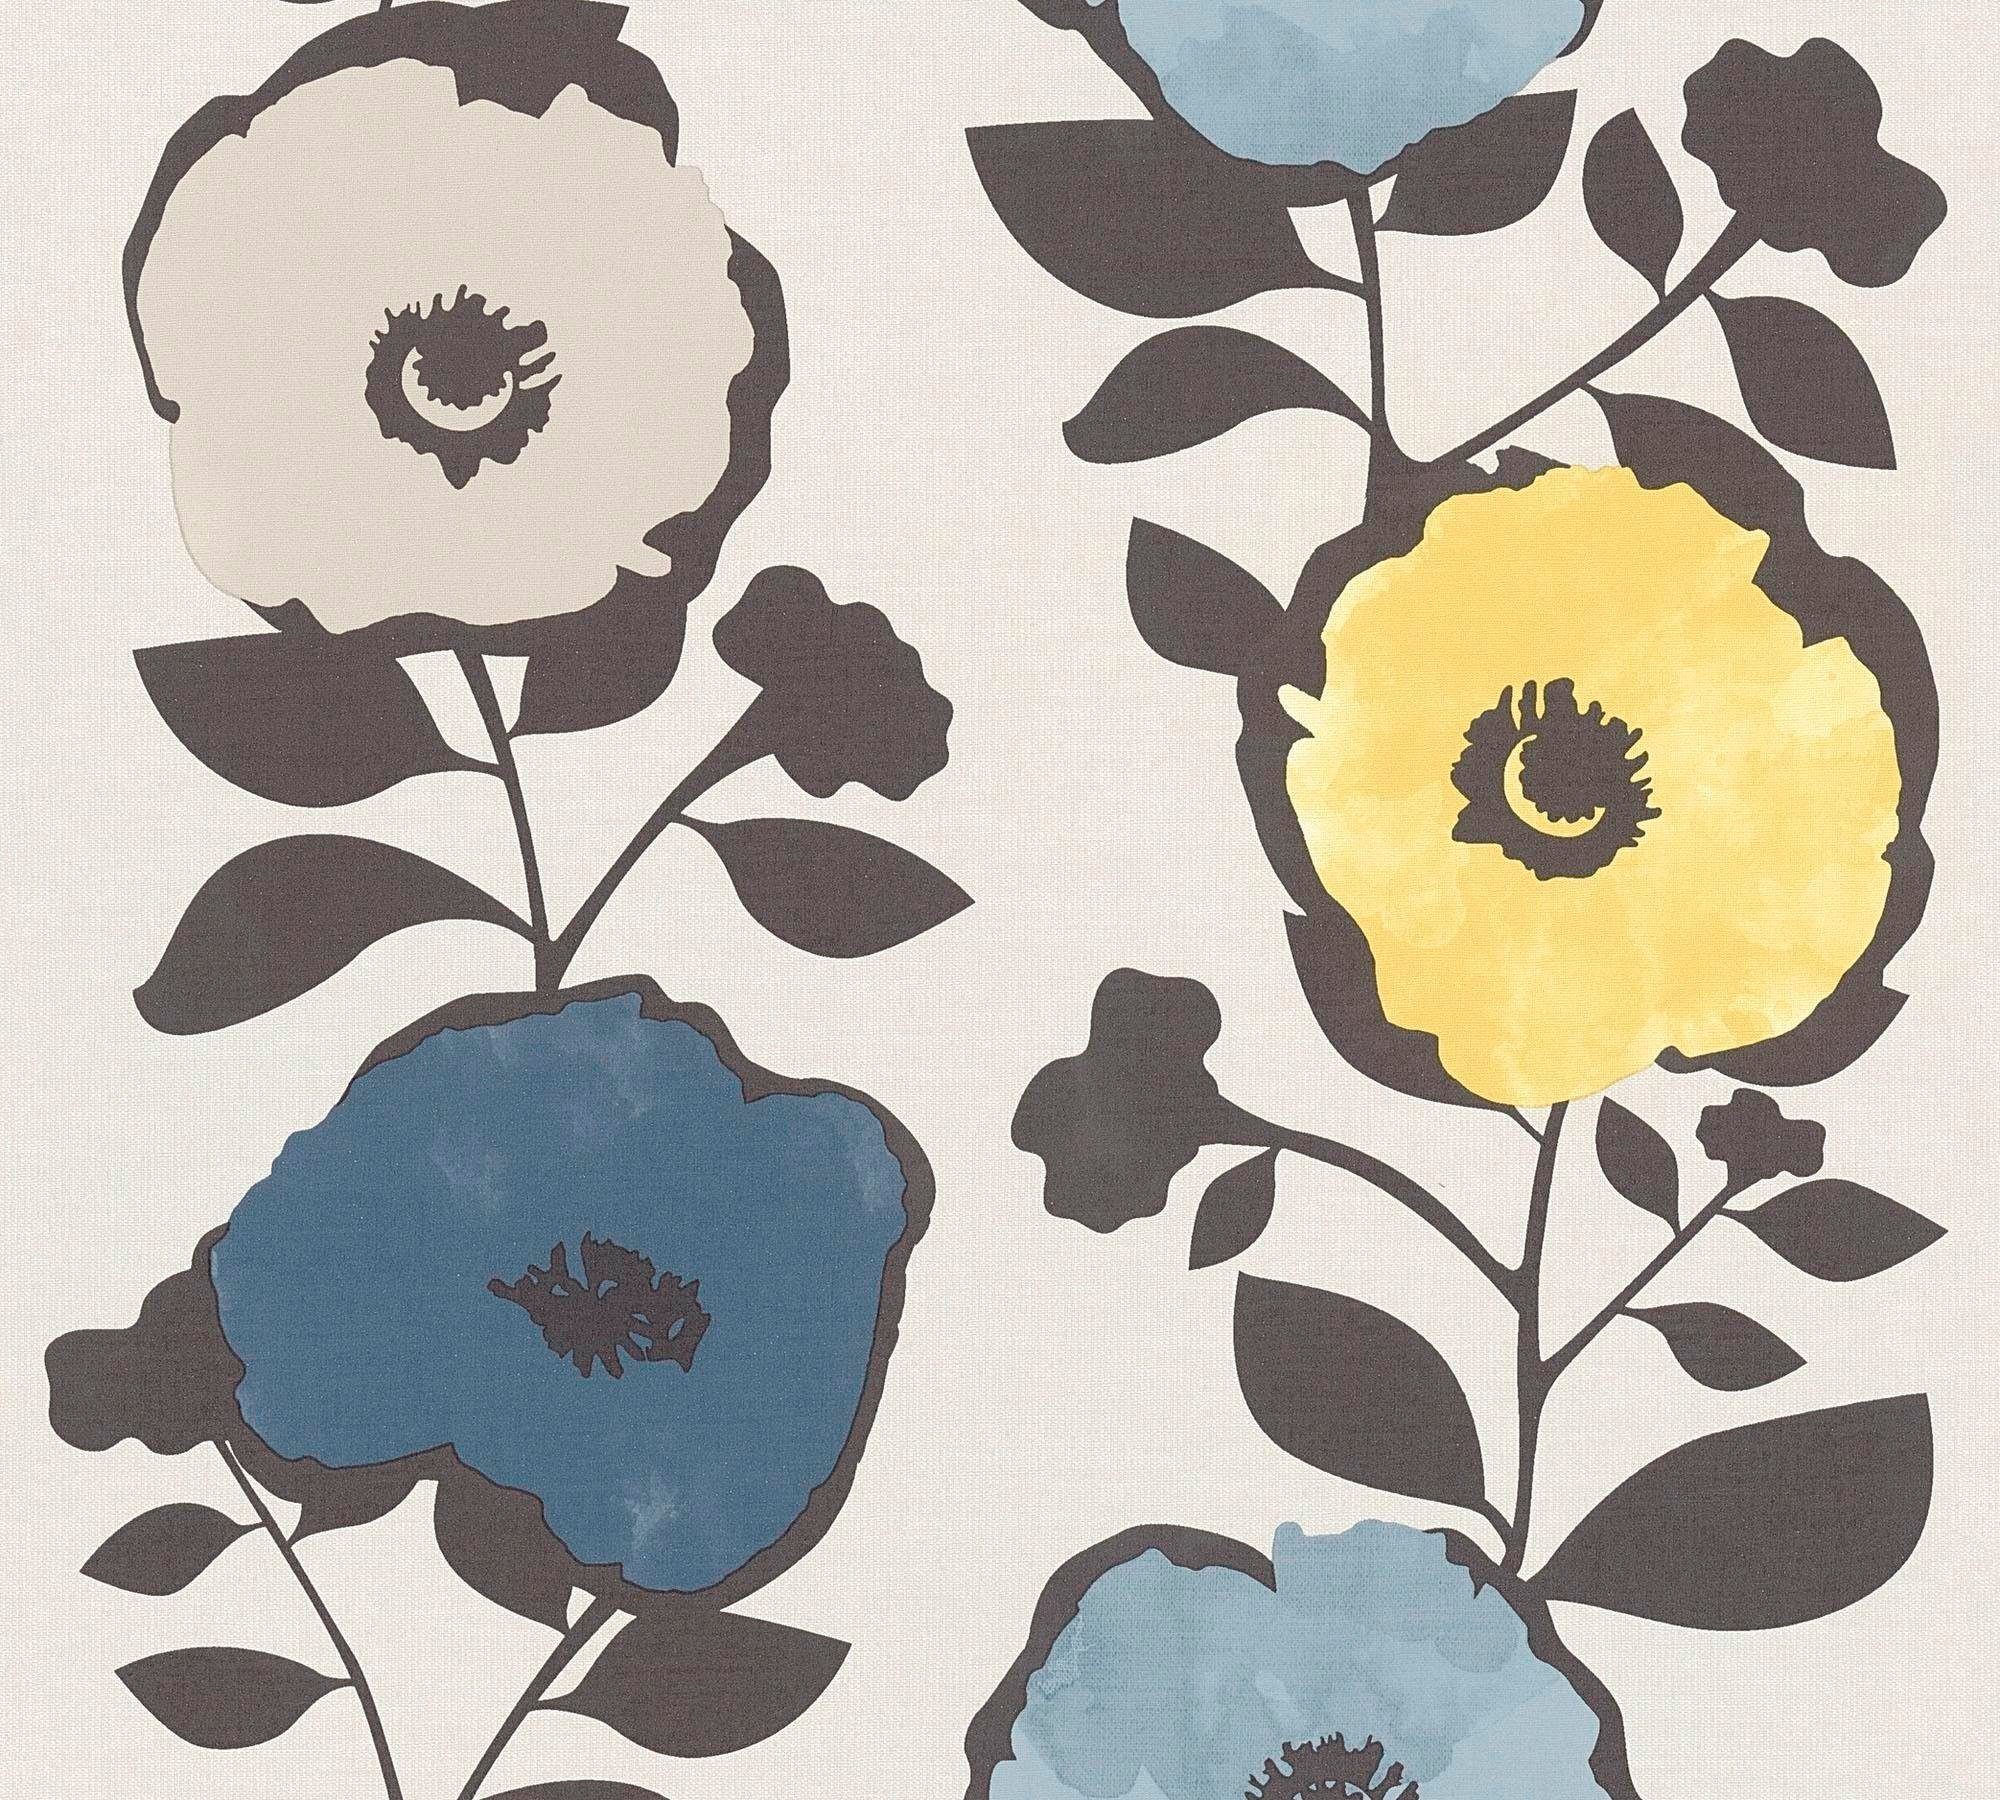 Création gelb/blau/beige/grau/creme Scandinavian, Vliestapete A.S. floral, living walls mit geblümt, Blumen